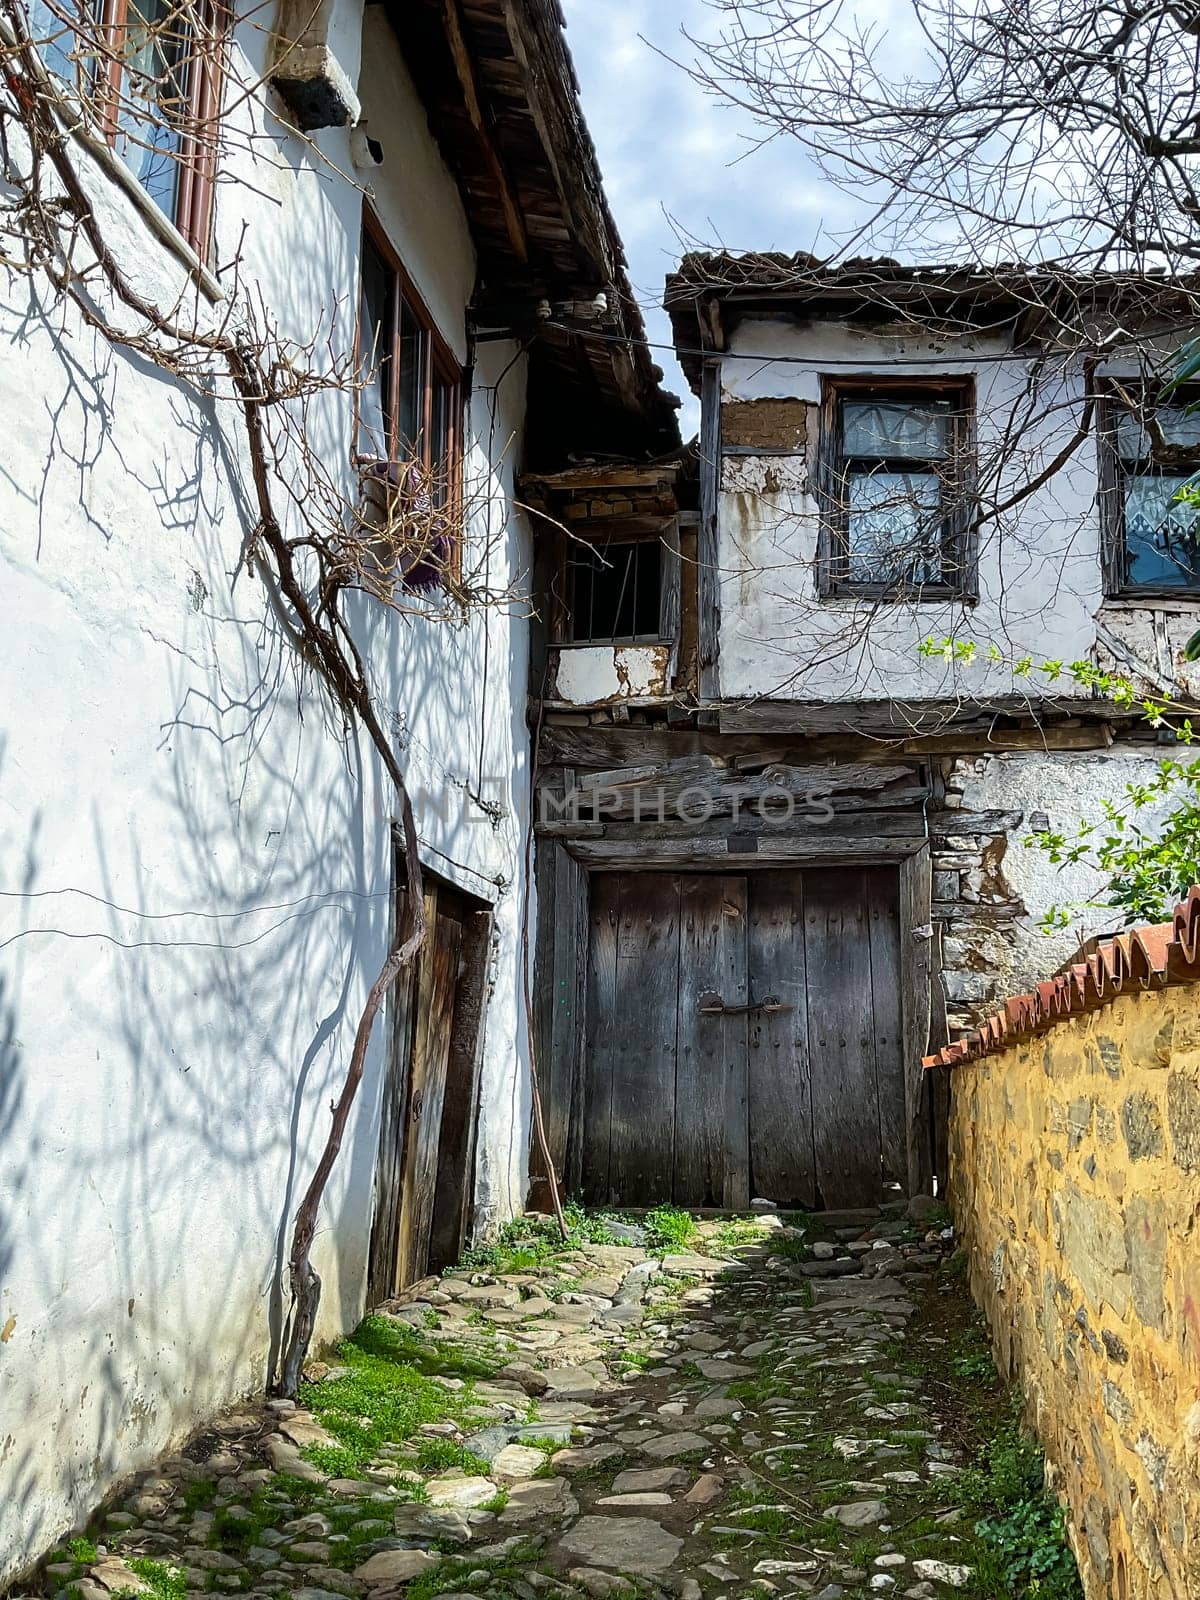 Cumalikizik village is a 700 years old Ottoman village in Turkey. Old Ottoman village in Bursa city, Turkey. Narrow street with old Ottoman houses